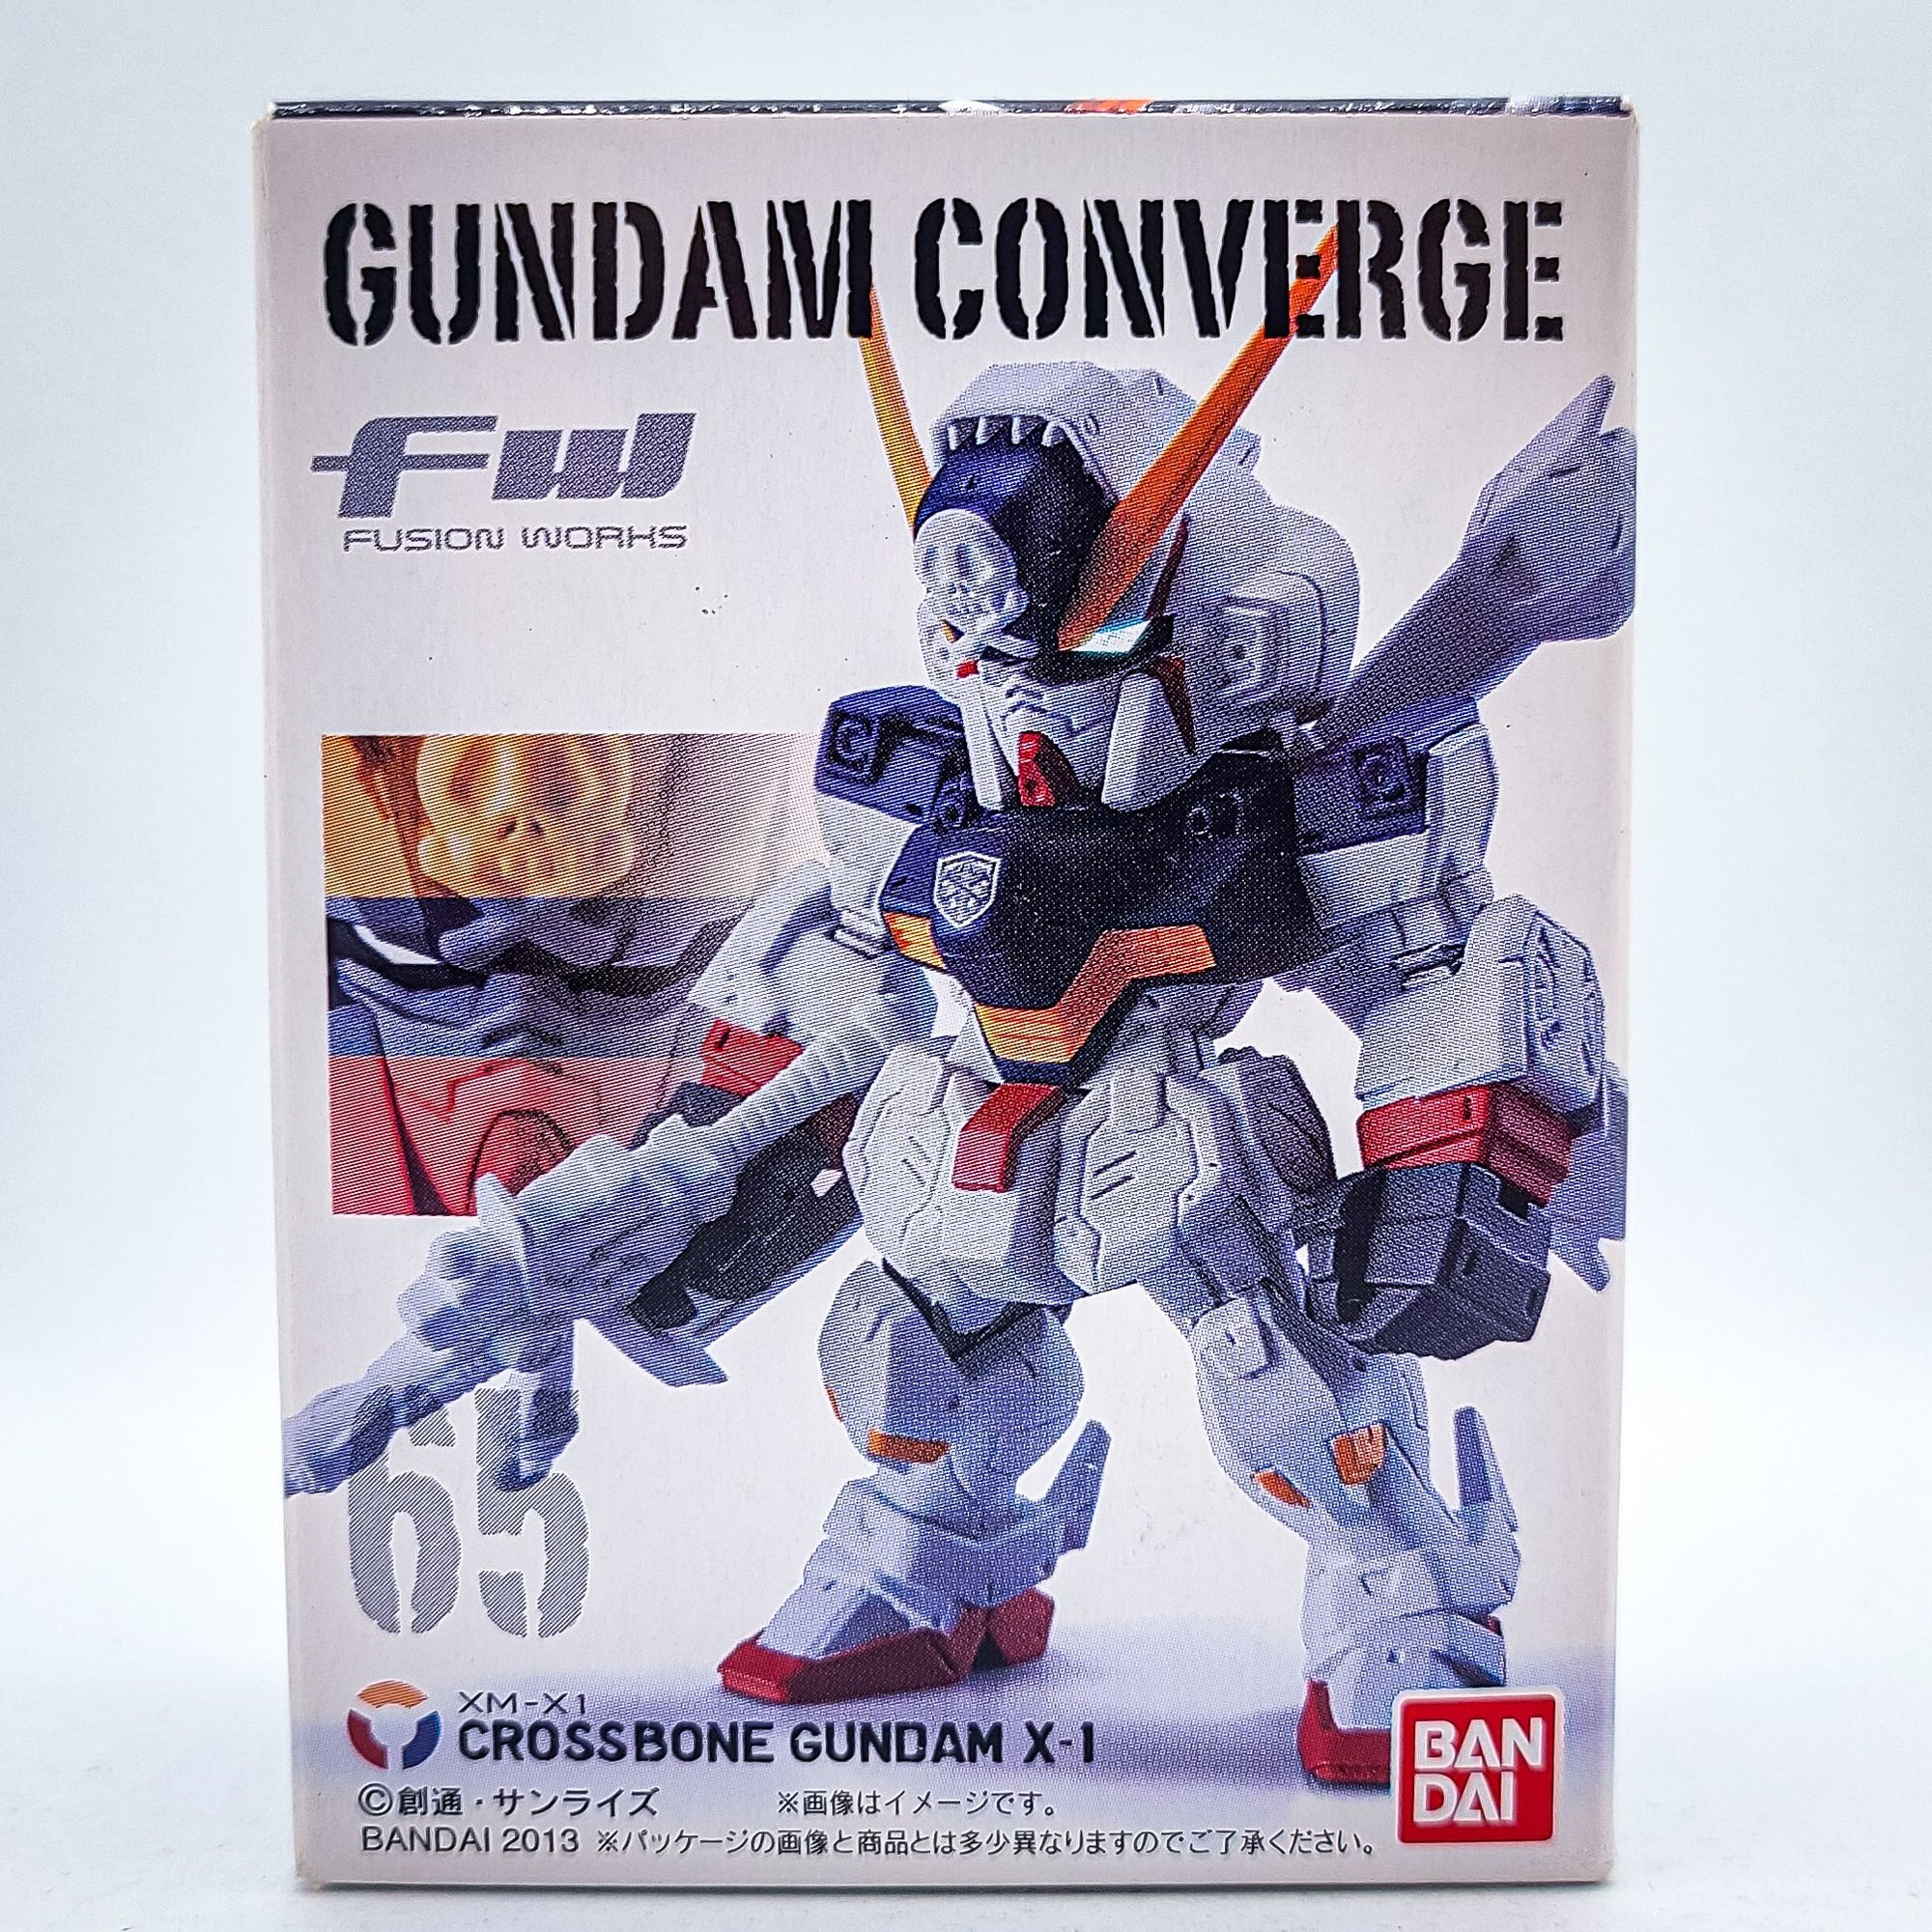 Gundam Converge #65 Crossbone Gundam X-1 by Bandai - 1